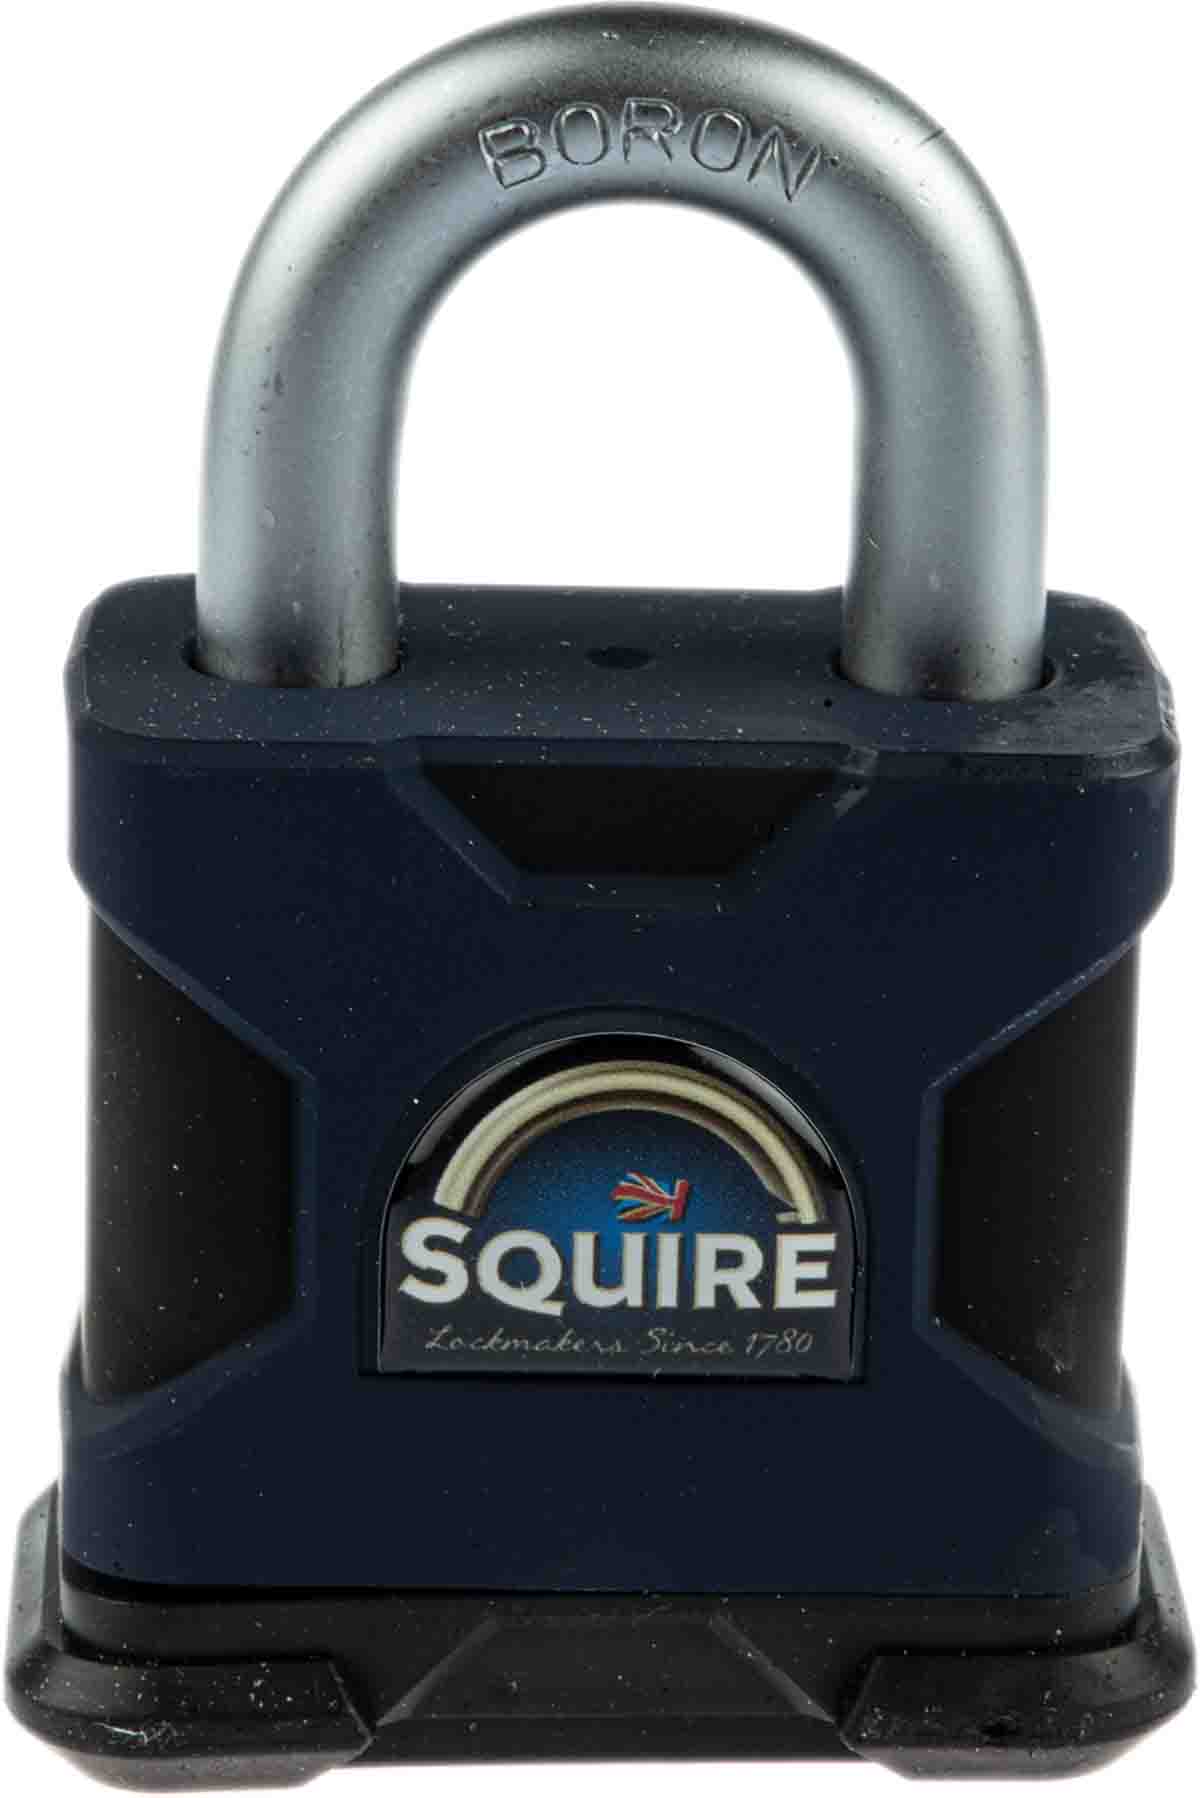 Squire Key Weatherproof Hardened Steel Padlock, 10mm Shackle, 50mm Body